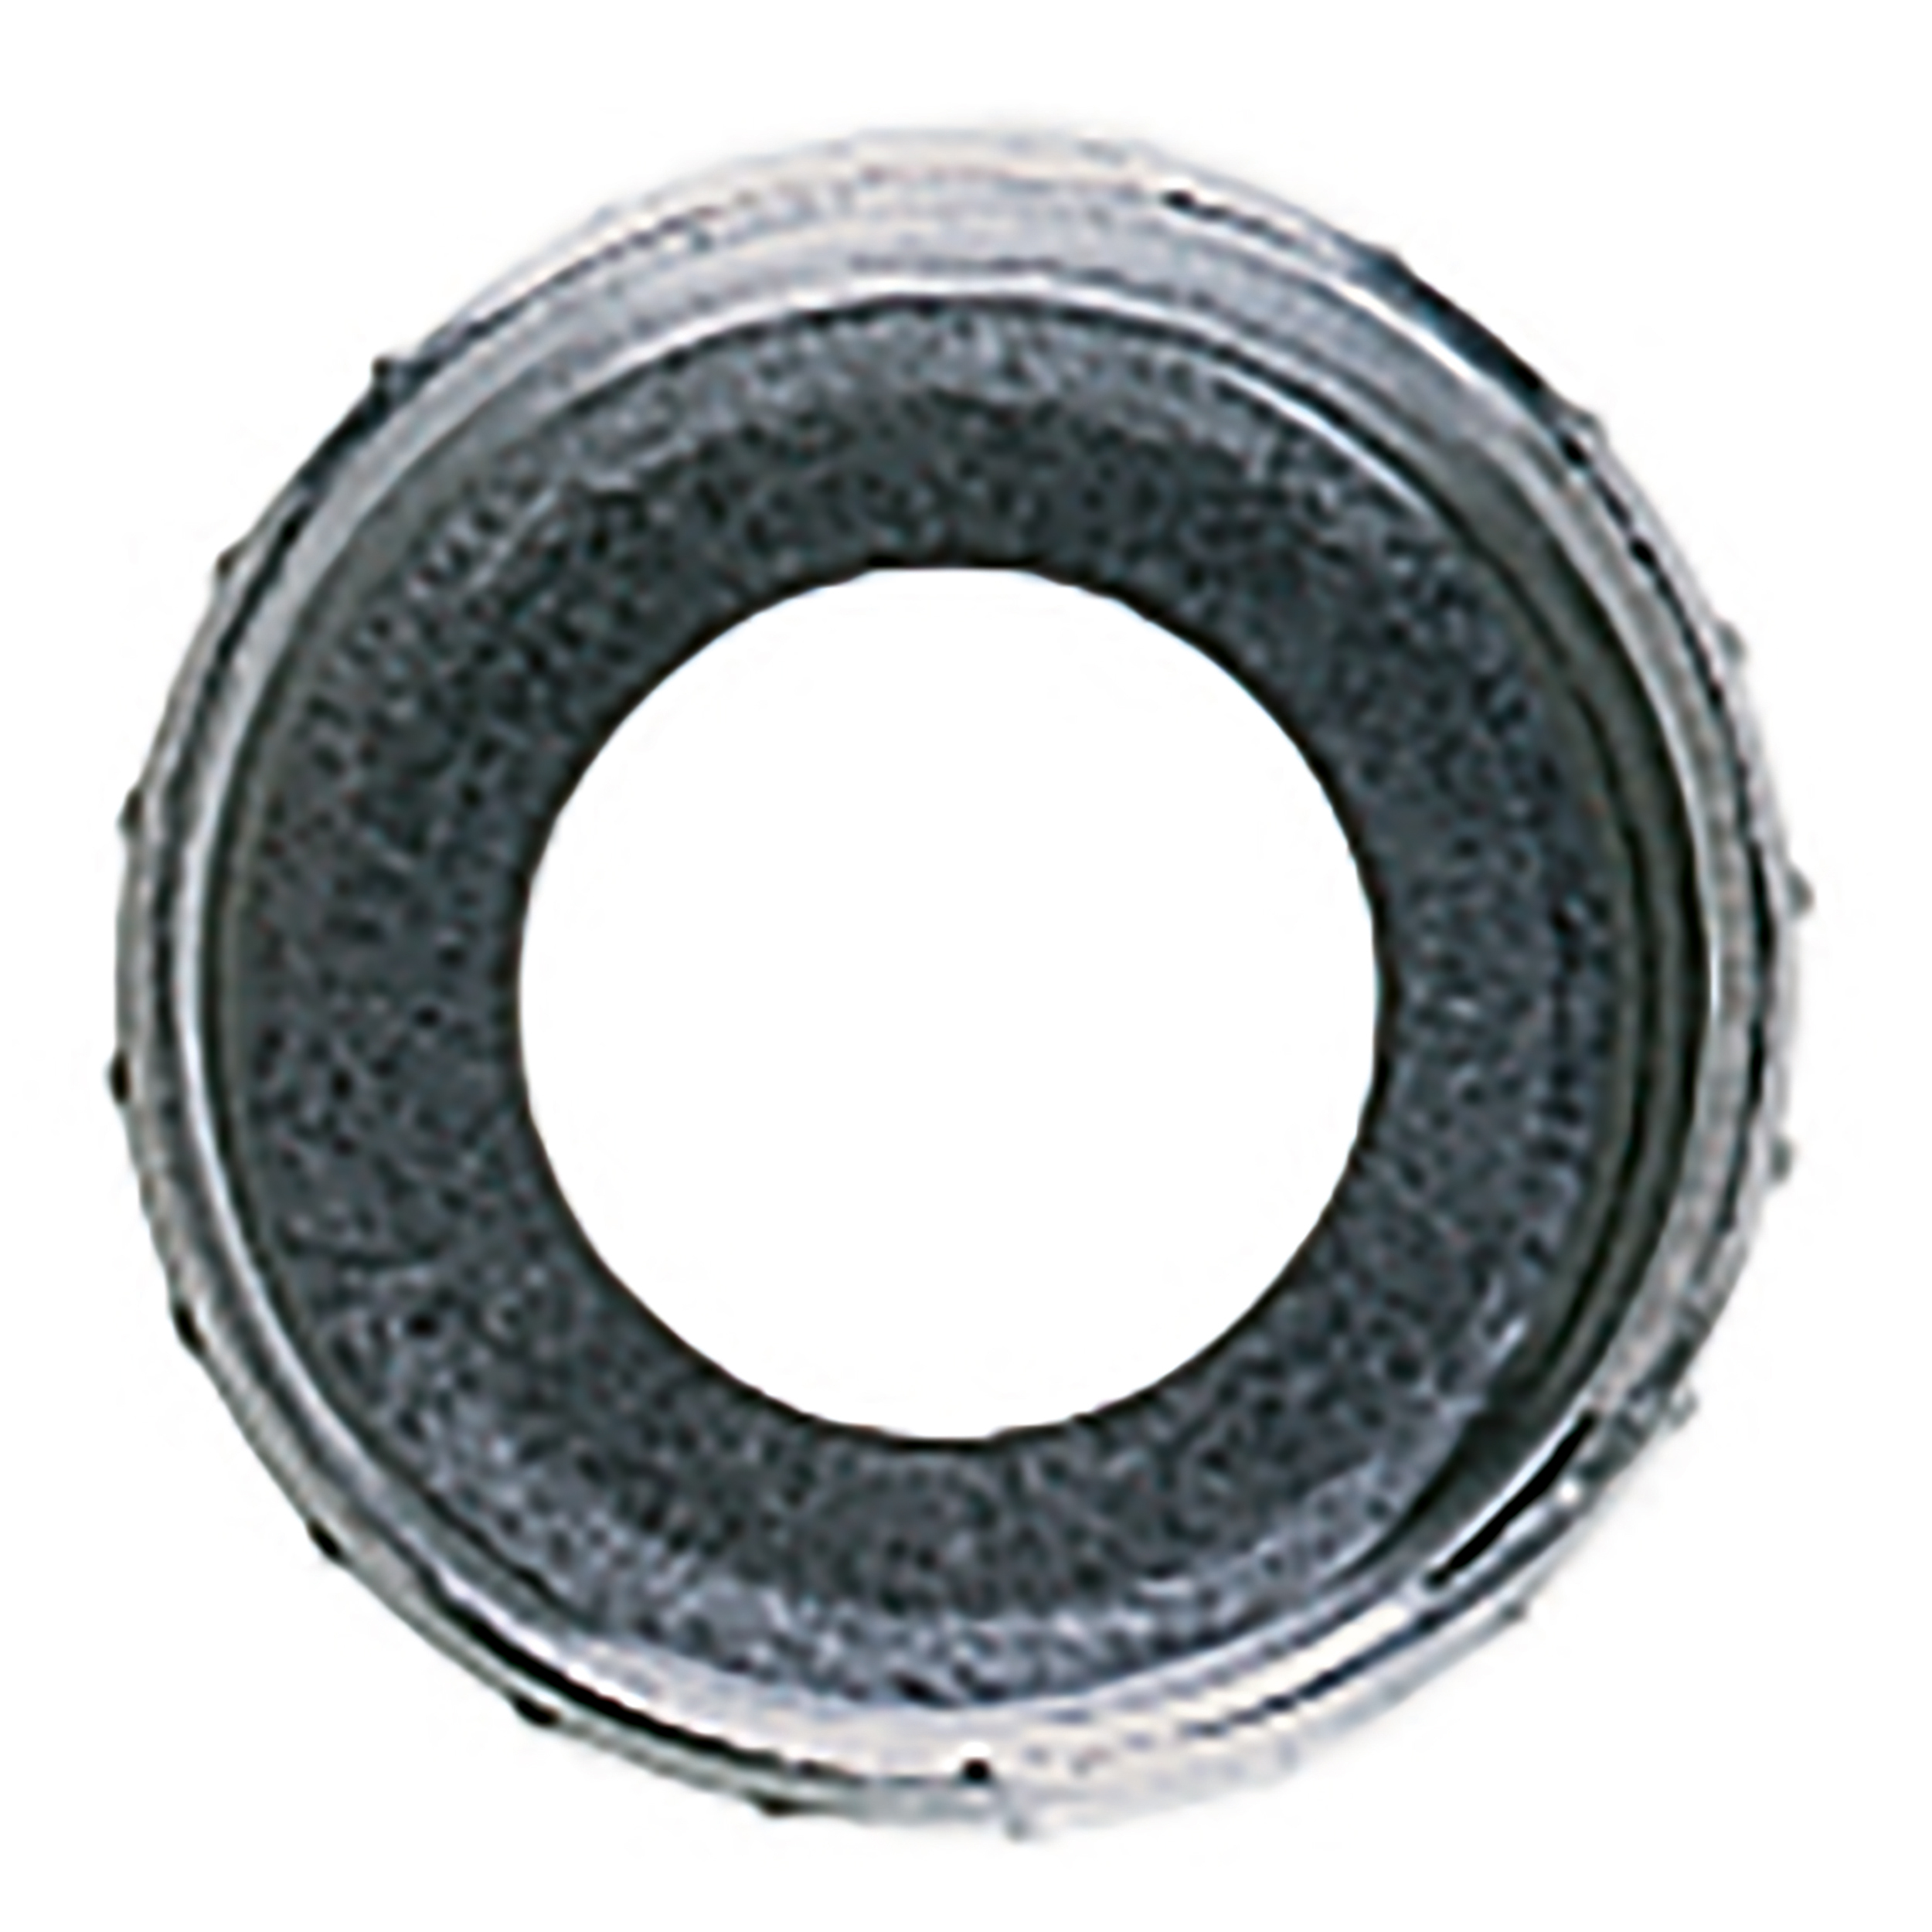 Metalldeckel für Sprühpistolenbecher 0,7 l, Material: Aluminium/Stahl